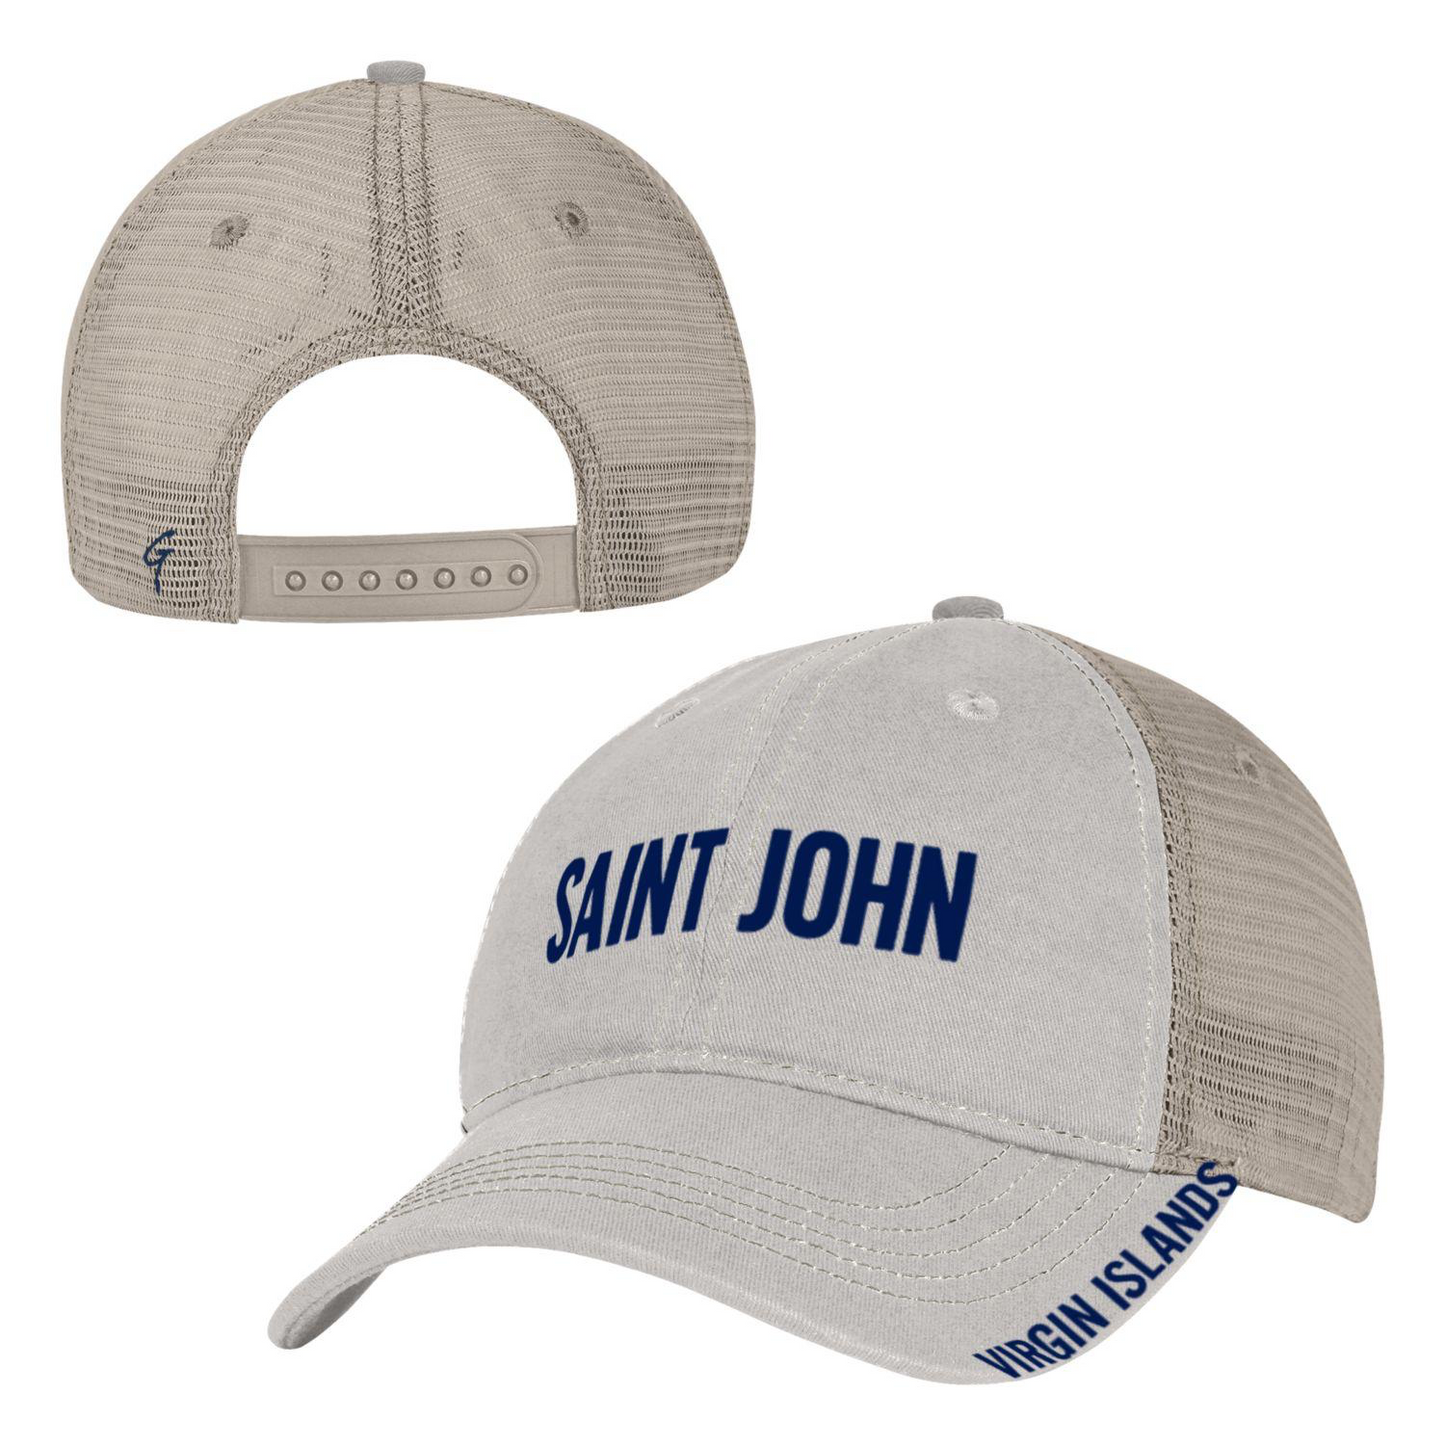 Saint John Trucker Hat